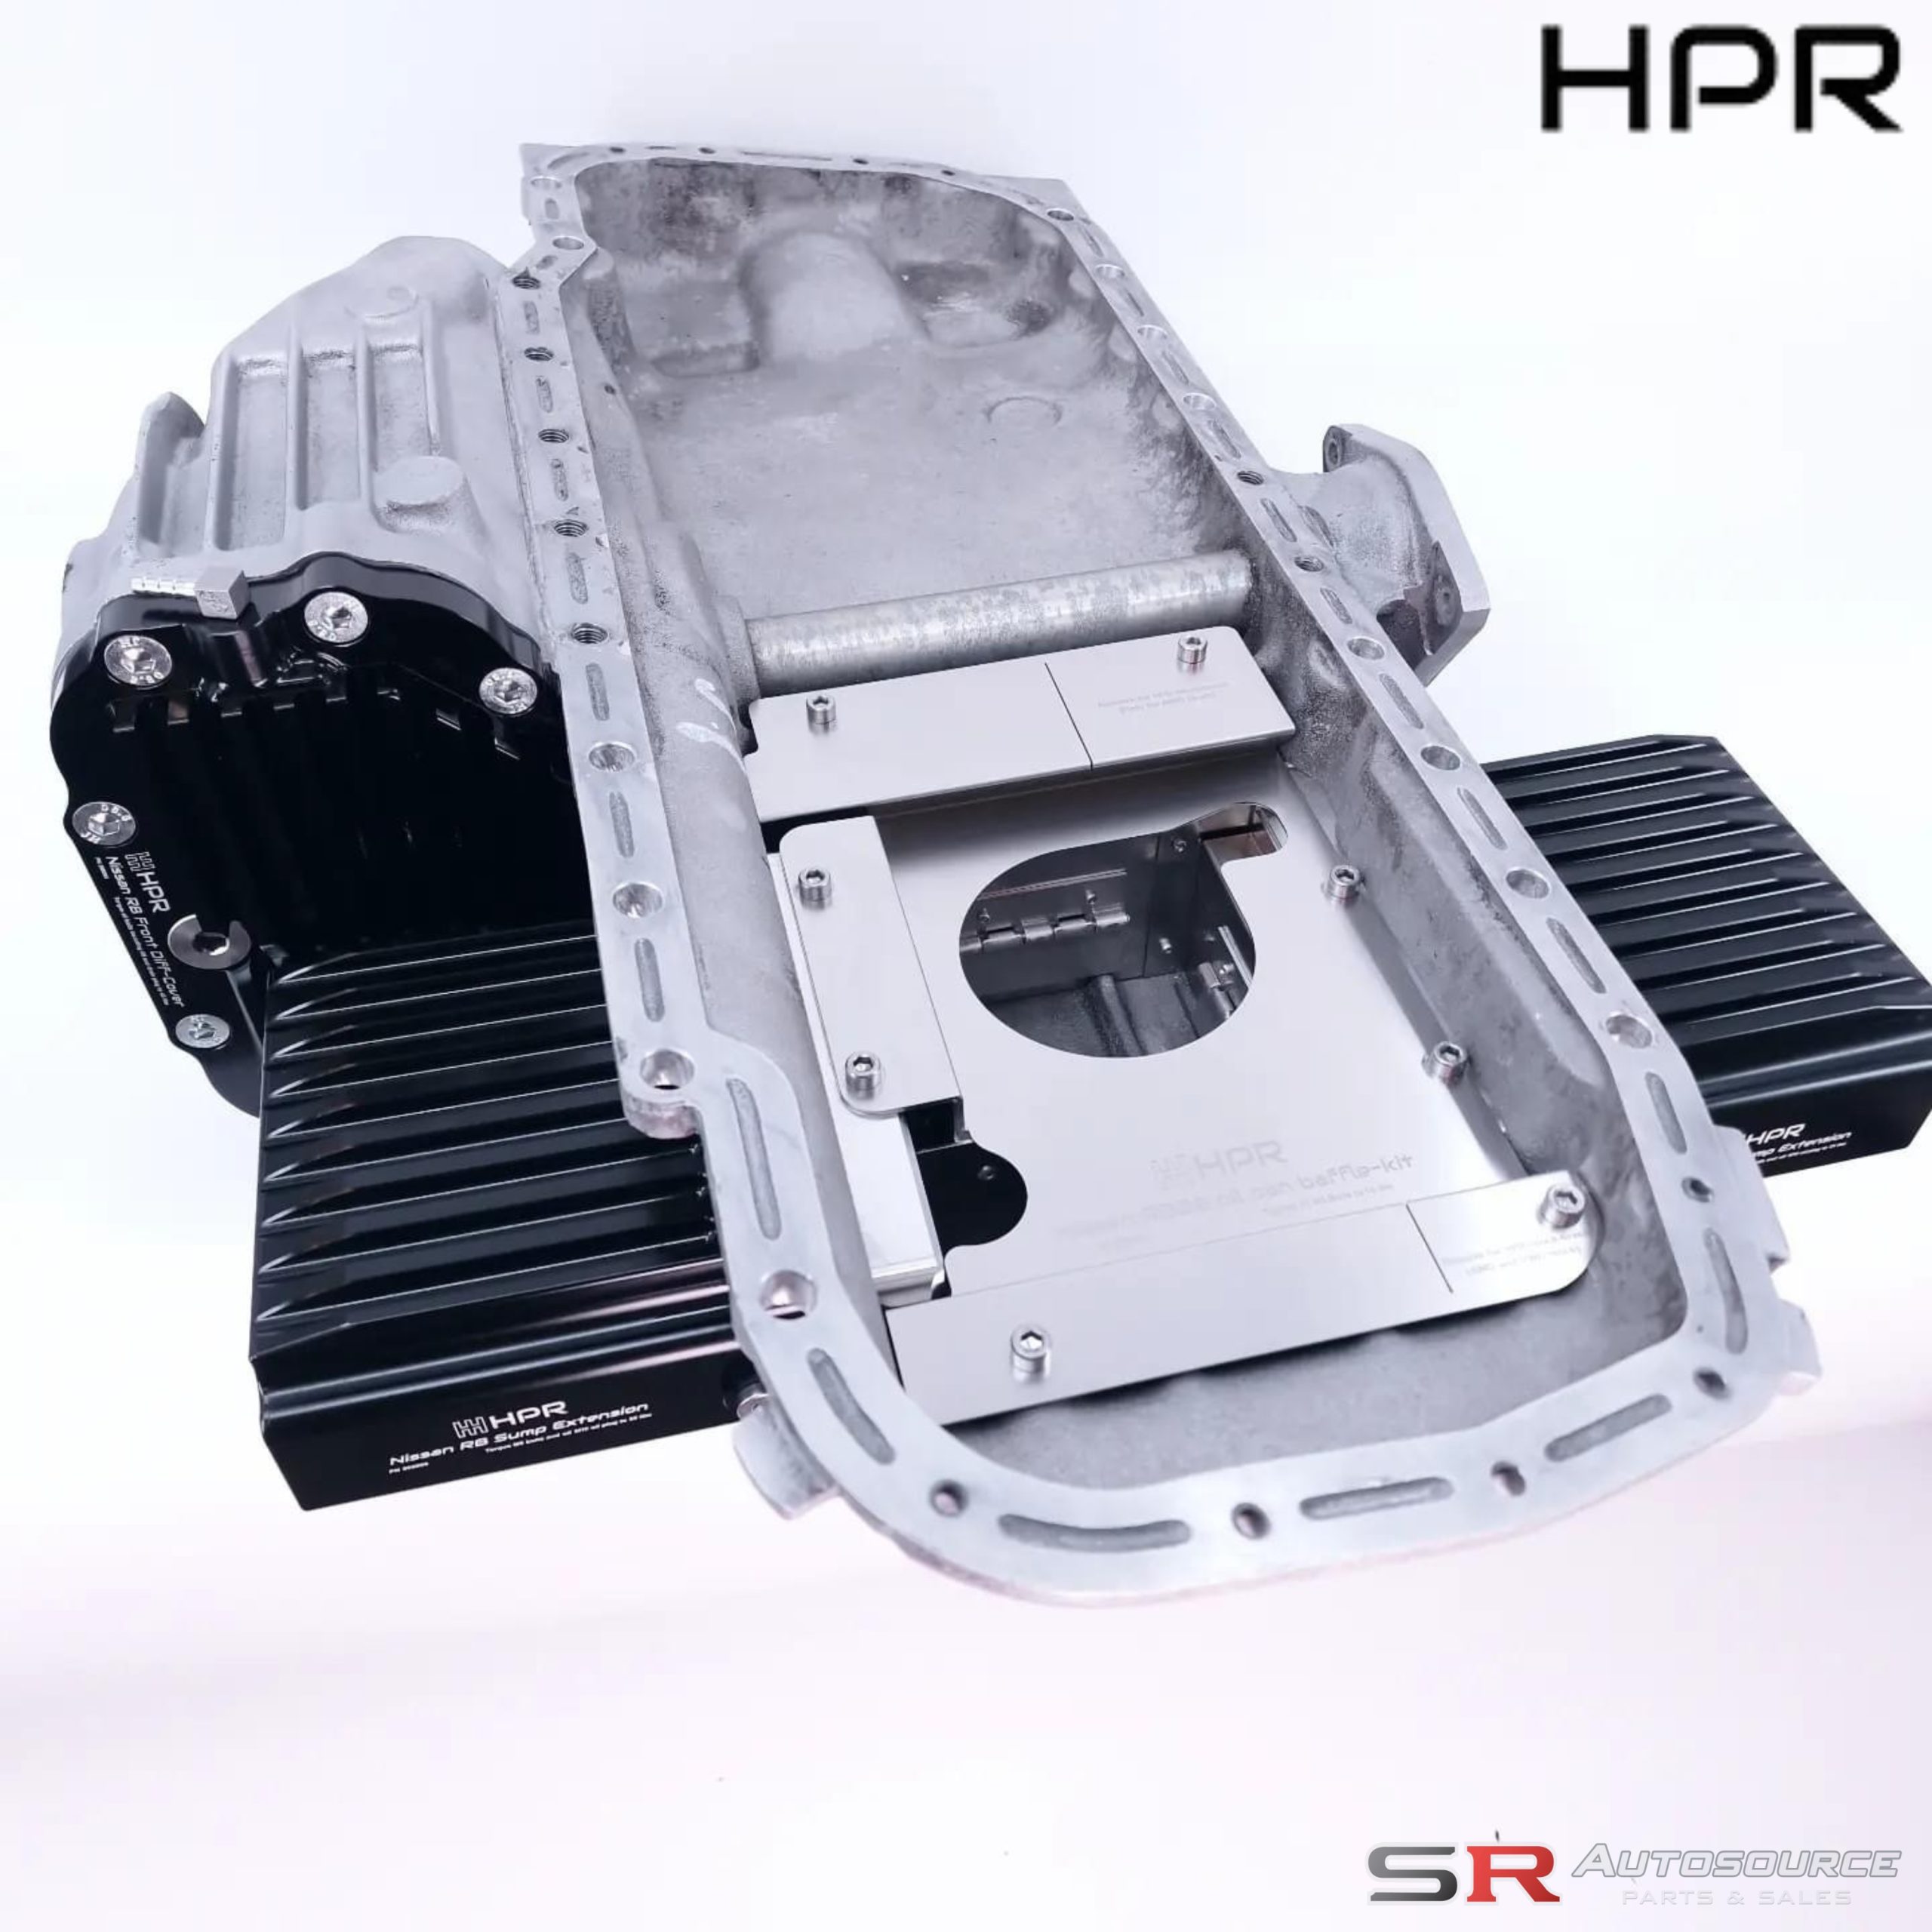 HPR Tuning RB26 Billet Sump Extension Kit